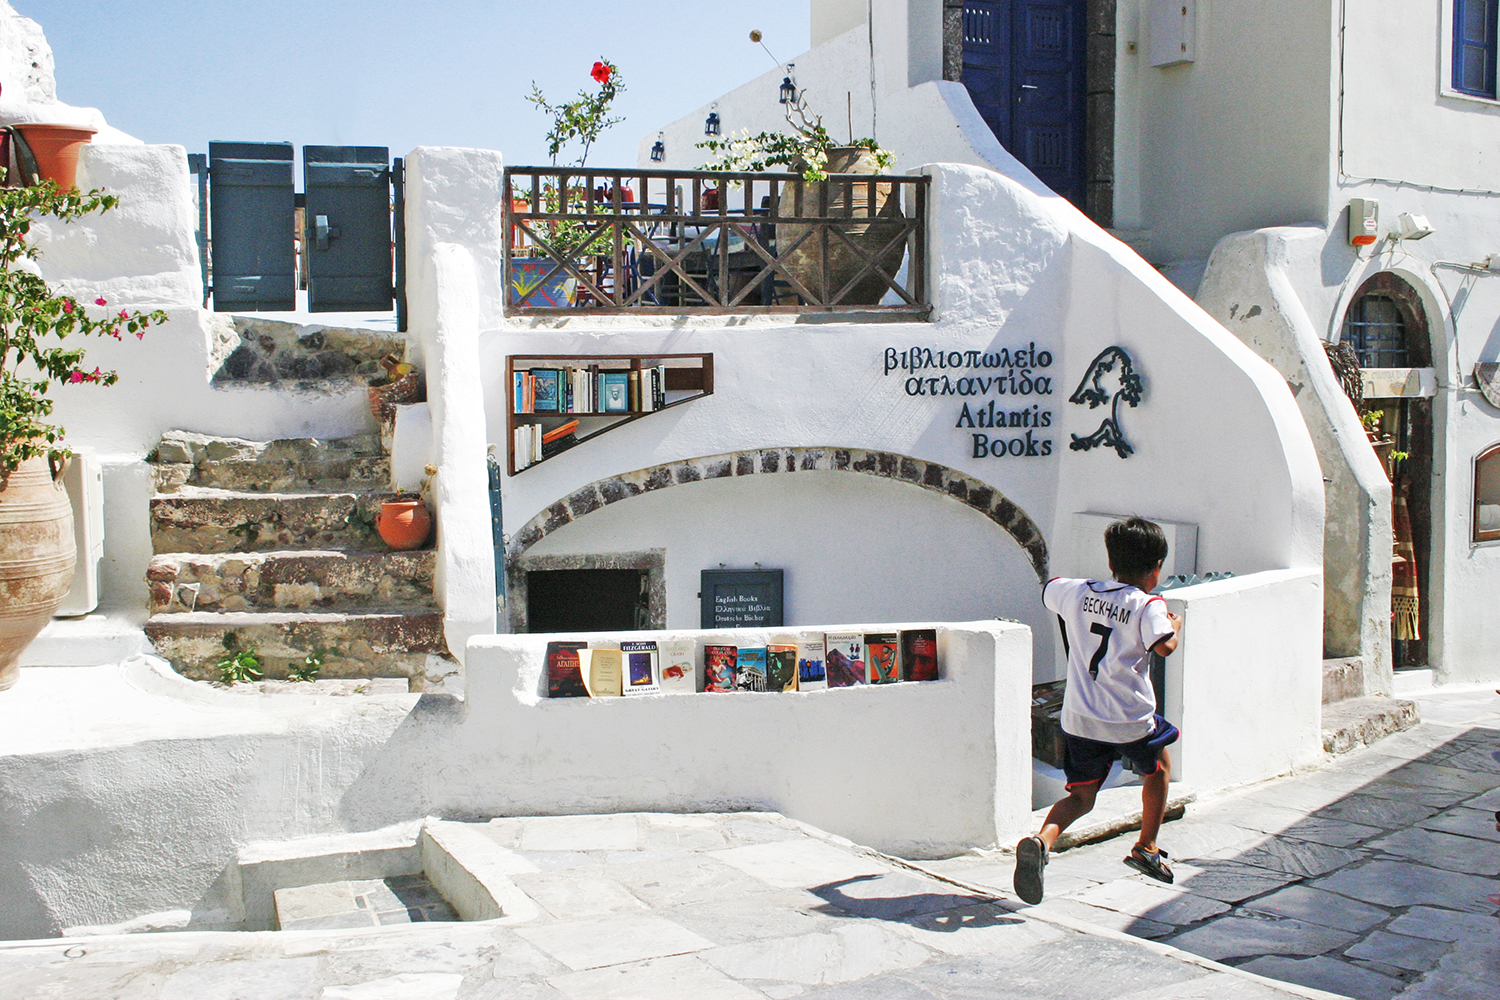 Atlantis Books in Stantorini, Greece - beautiful bookshops in Europe